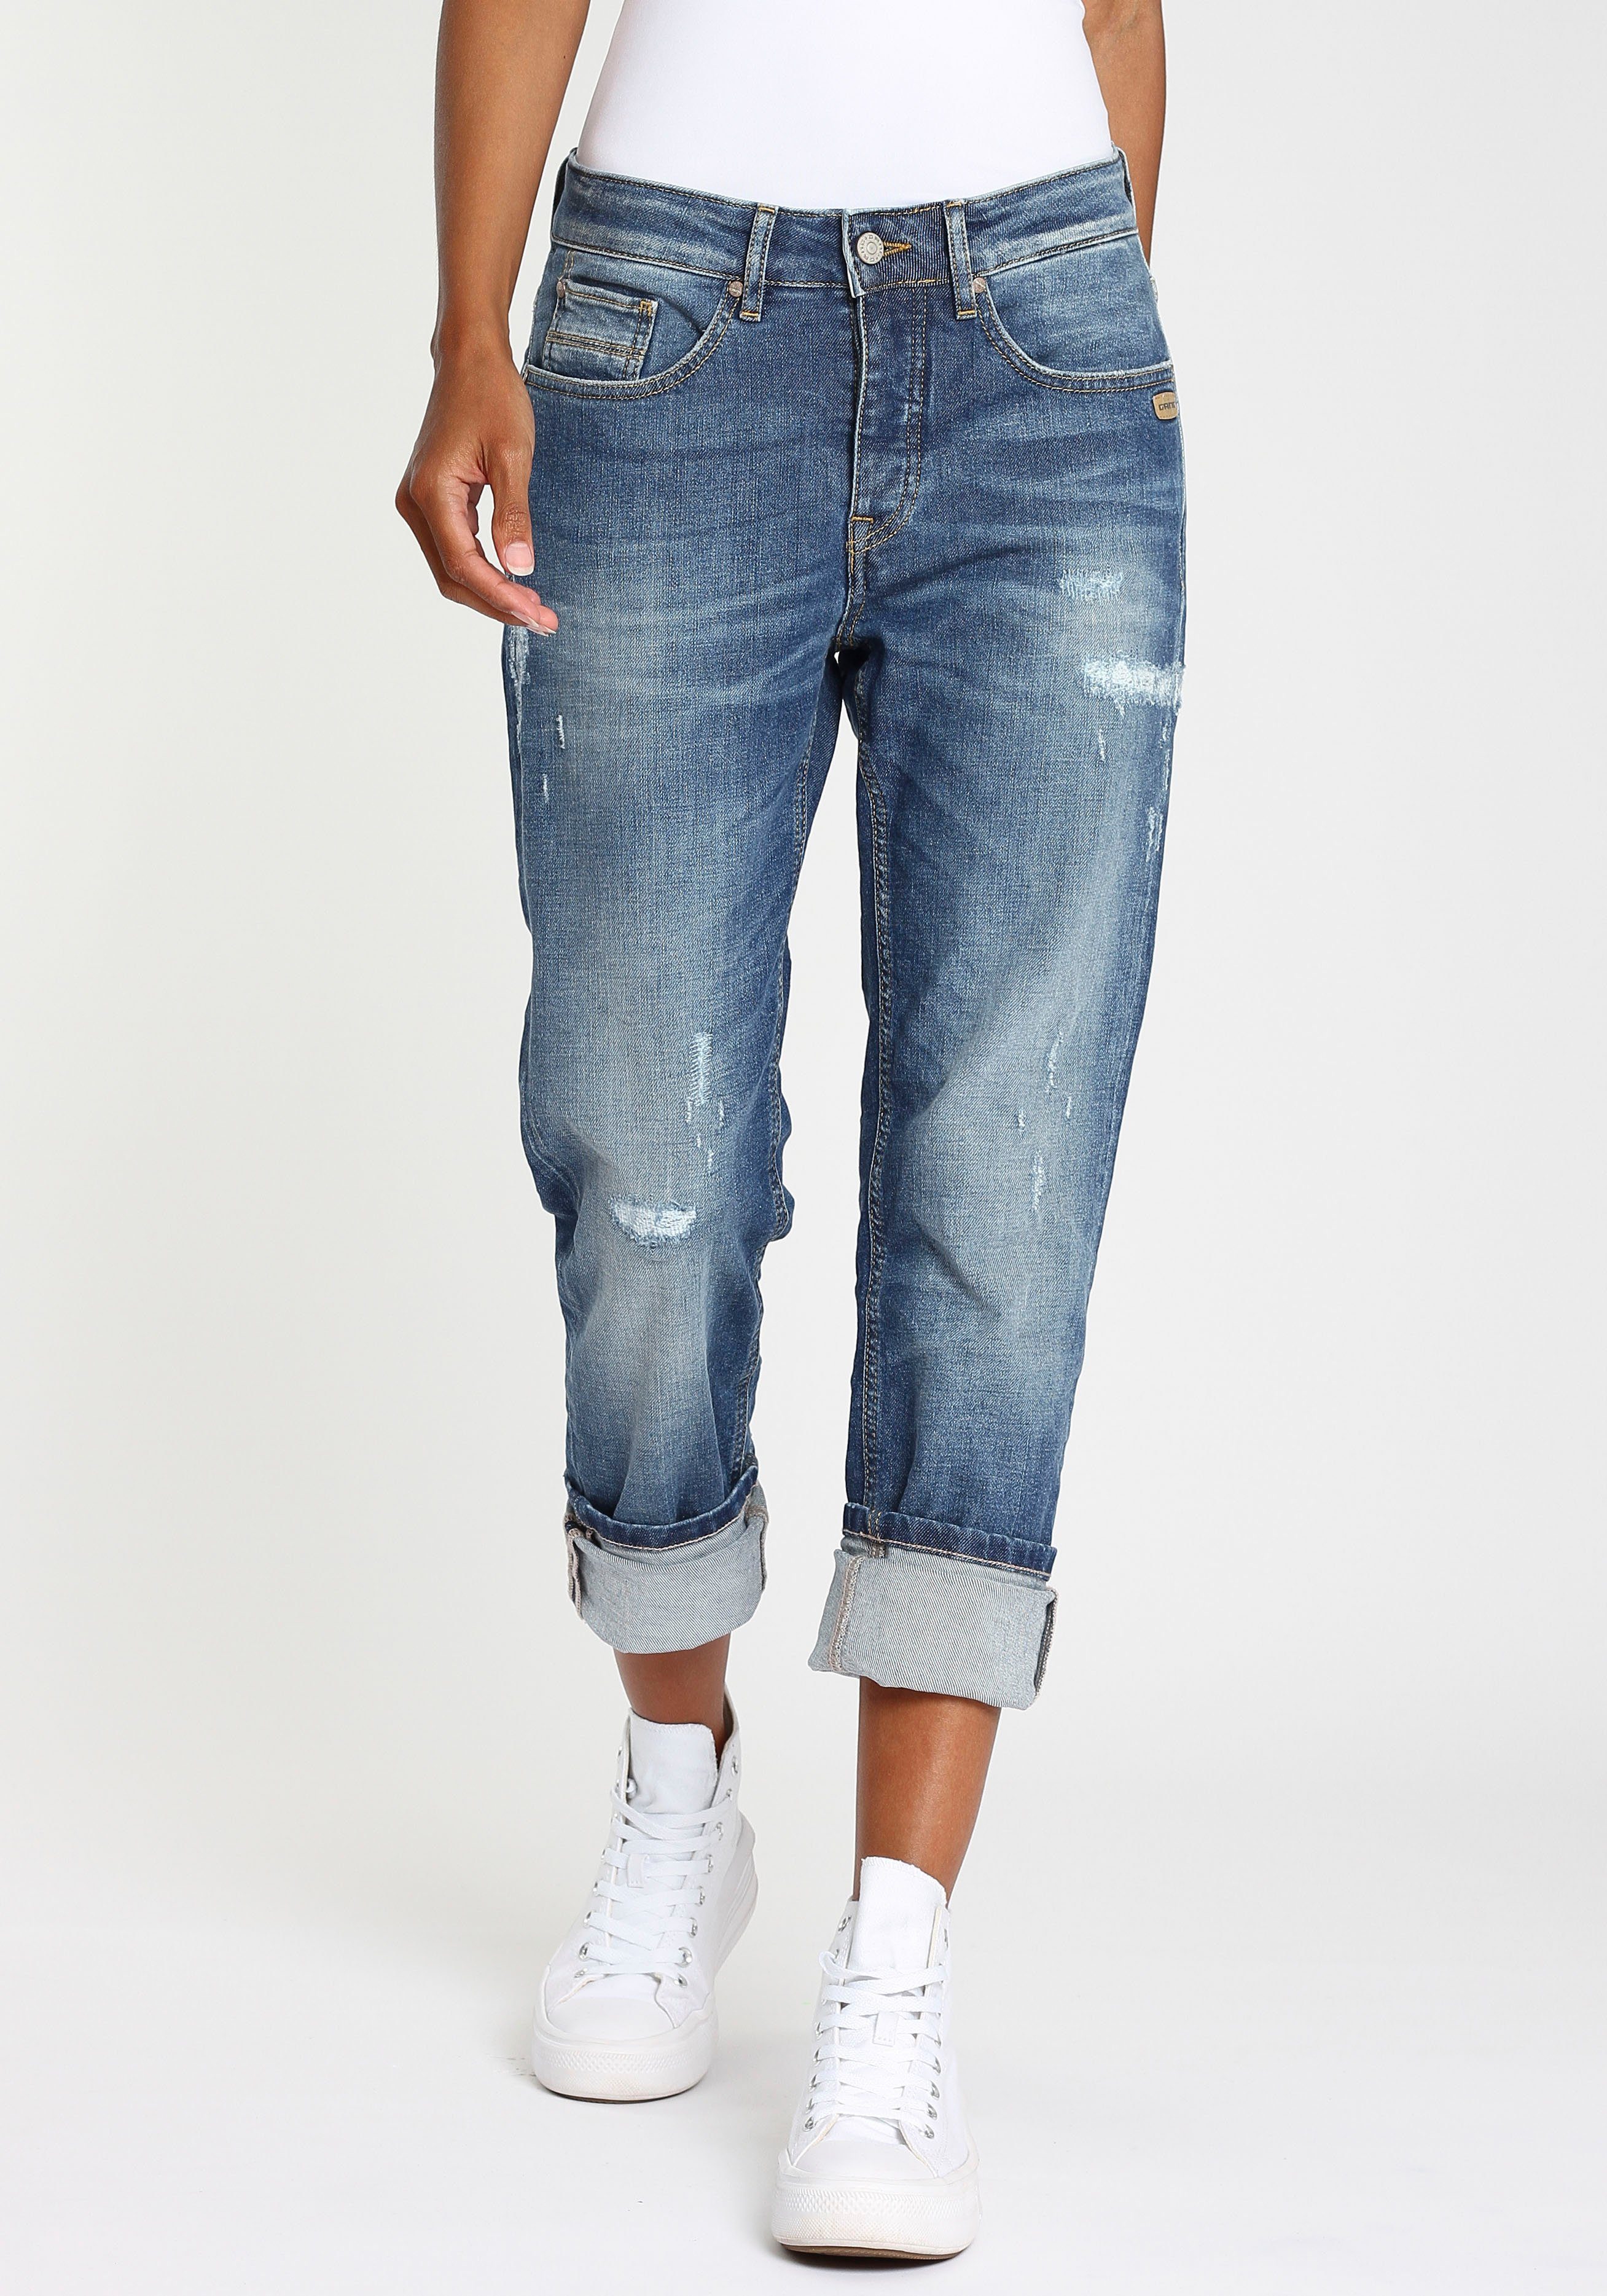 GANG Jeans online kaufen | OTTO